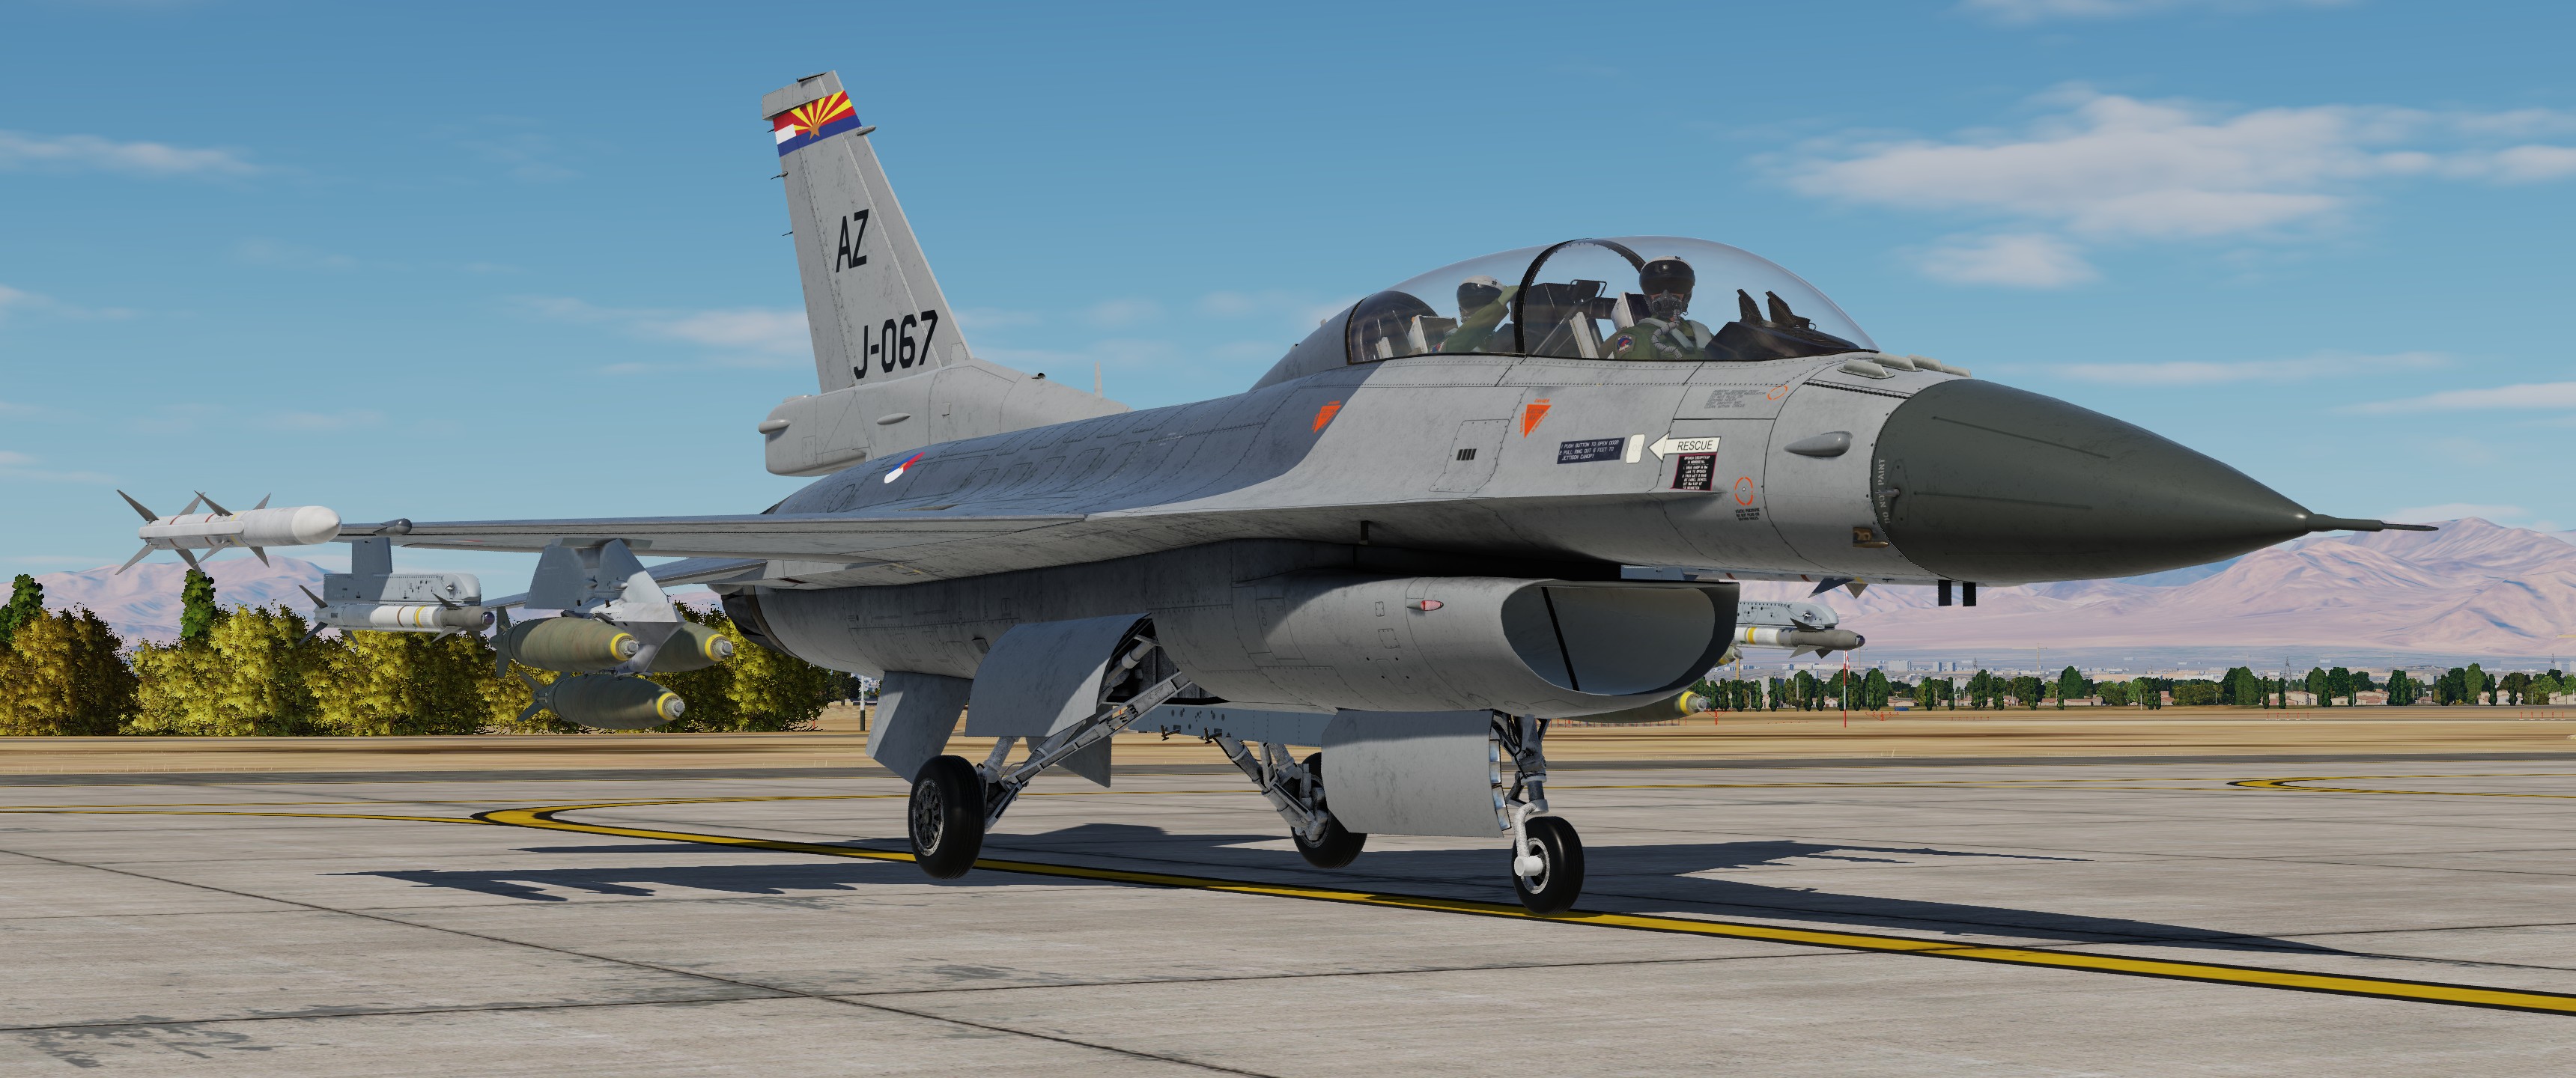 F-16D(BM) Sufa Mod J-067 RNLAF F-16 OCU 148th FS AZ, 162 FW, Arizona ANG, Morris AFB, Tucson.